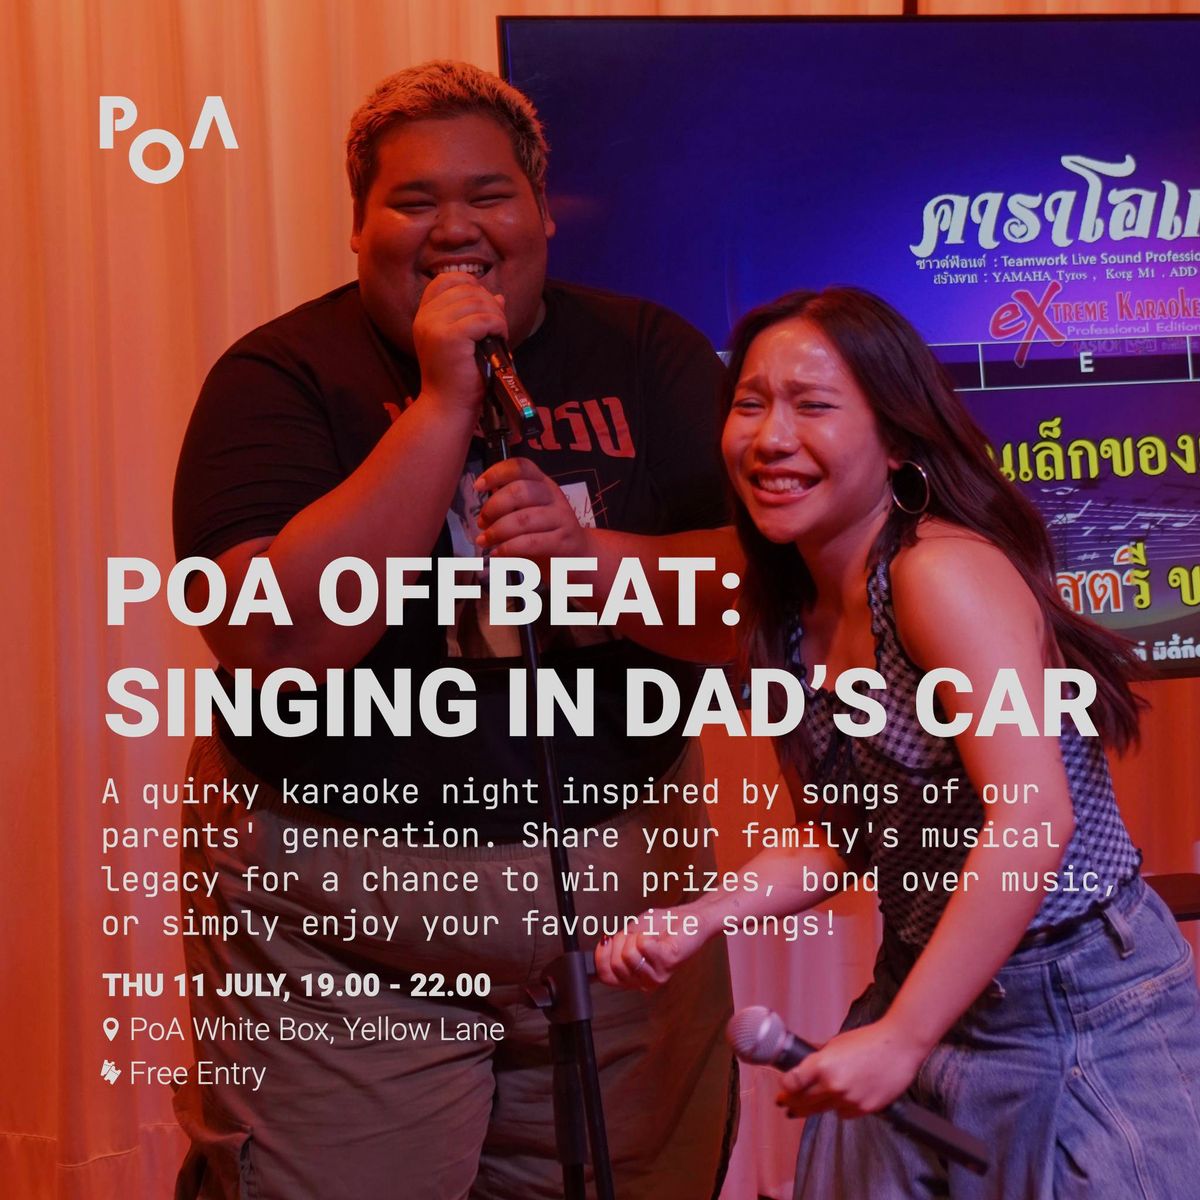 POA OFFBEAT: SINGING IN DAD'S CAR